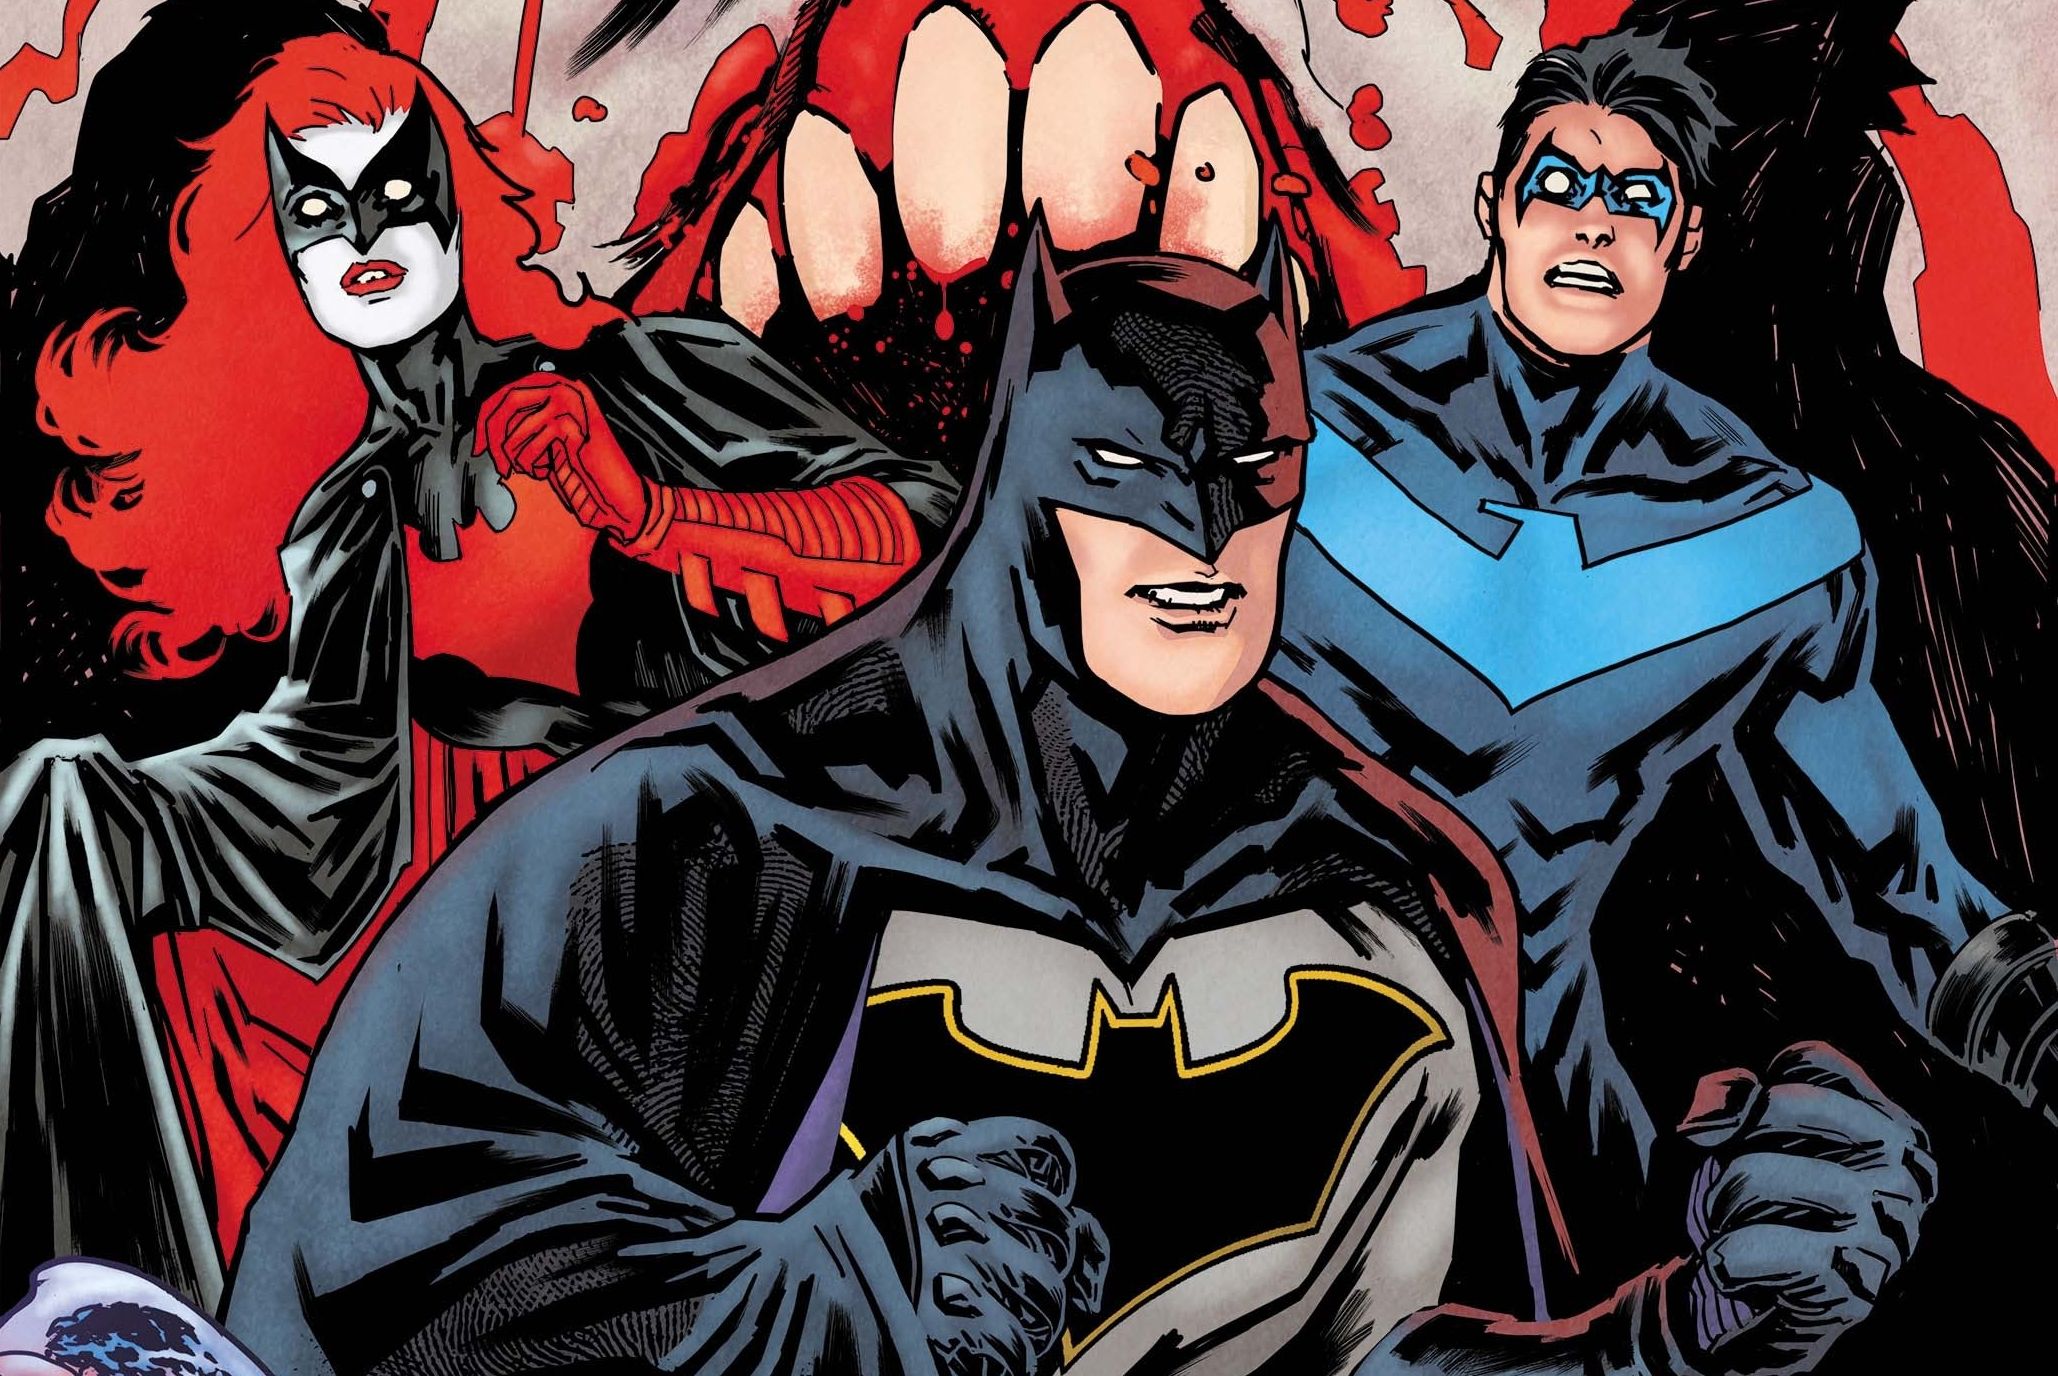 Скачать обои бесплатно Комиксы, Бэтмен, Найтвинг, Бэтвумен картинка на рабочий стол ПК